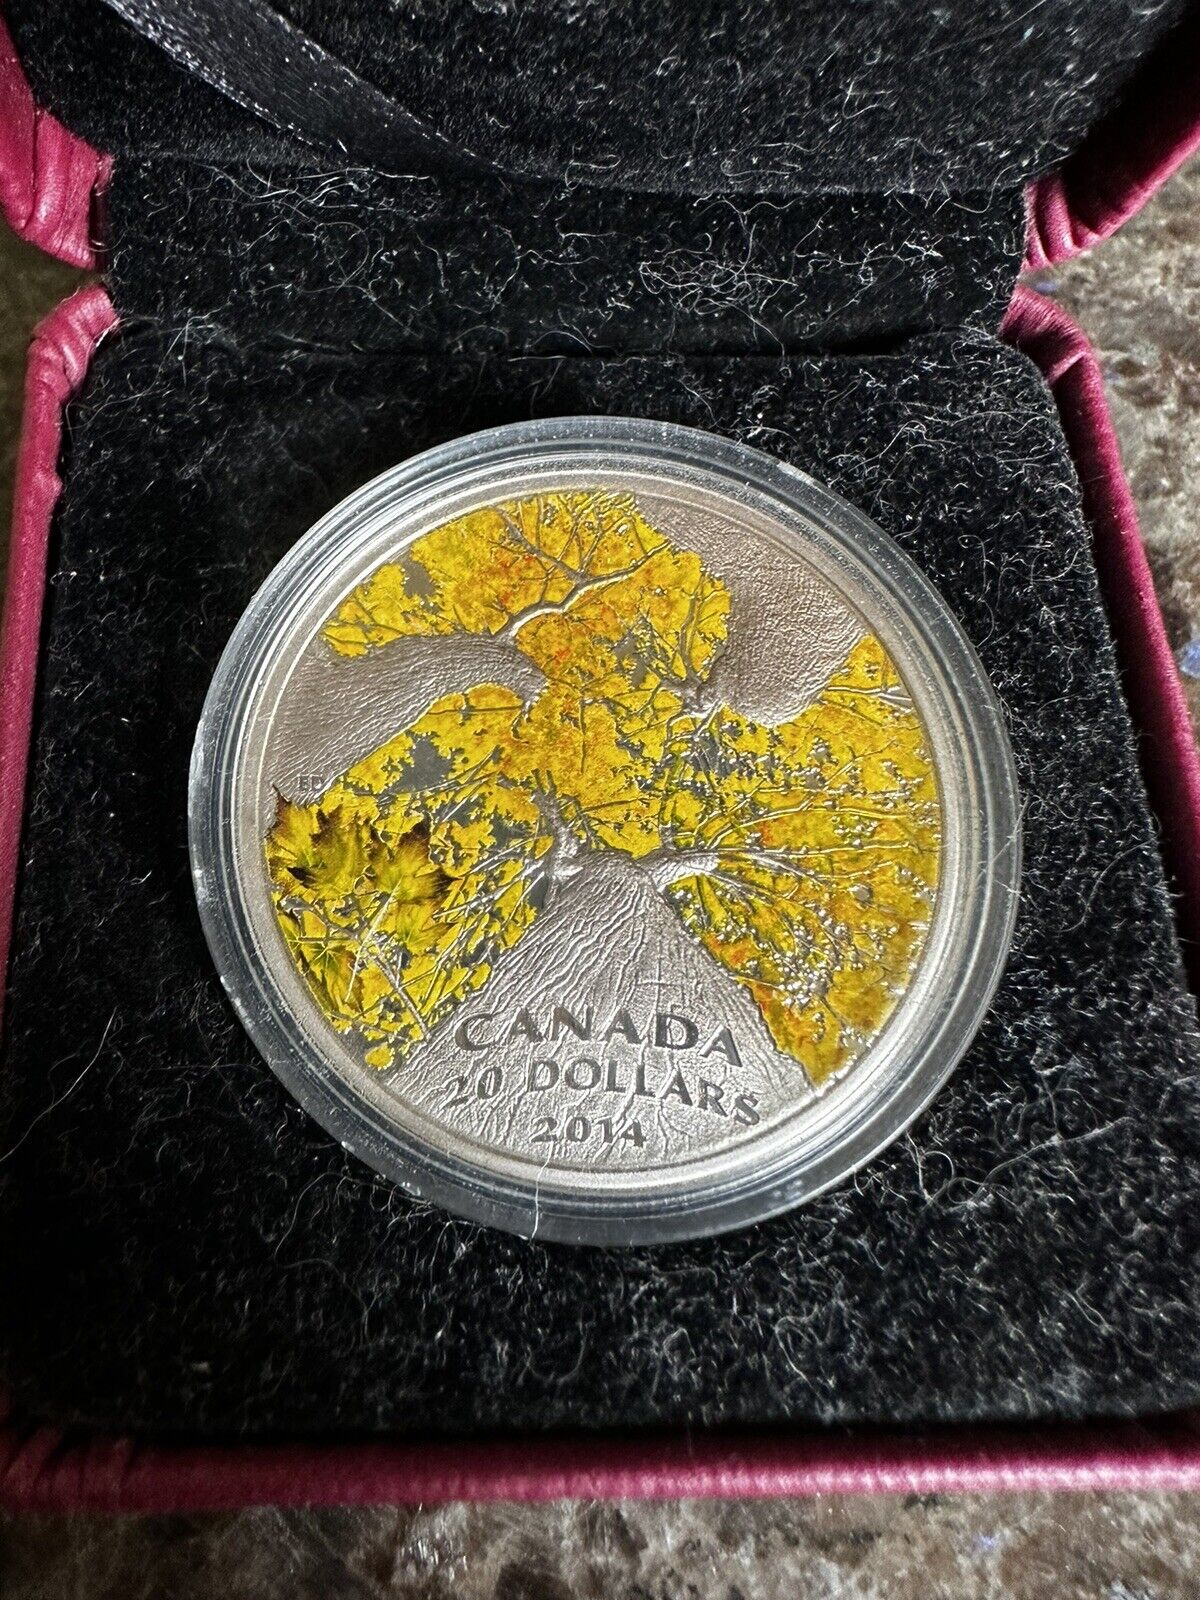 Uncirculated Mint Canada 2014 $20 Proof Colored Canada Maple 1oz Pure Silver